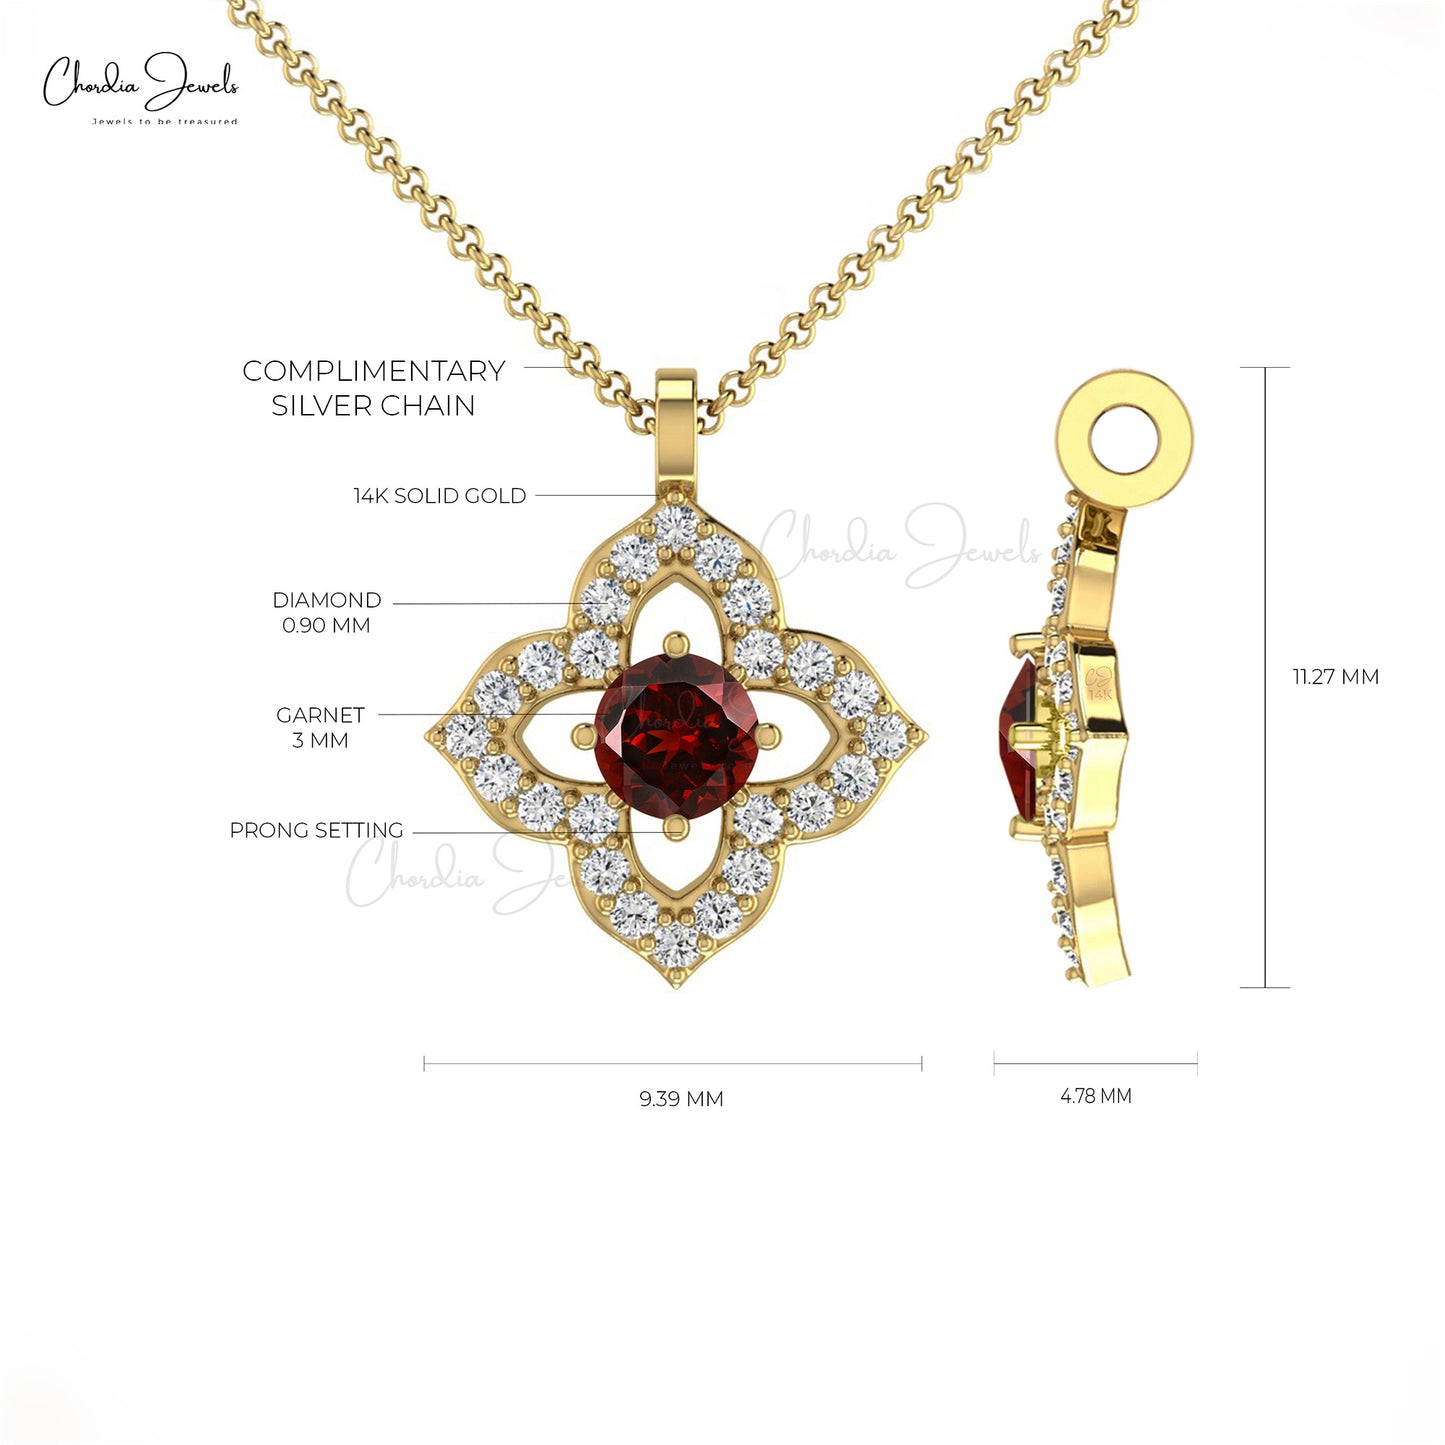 Elegant Round Garnet Pendant Necklace in 14K Gold with G-H Diamond